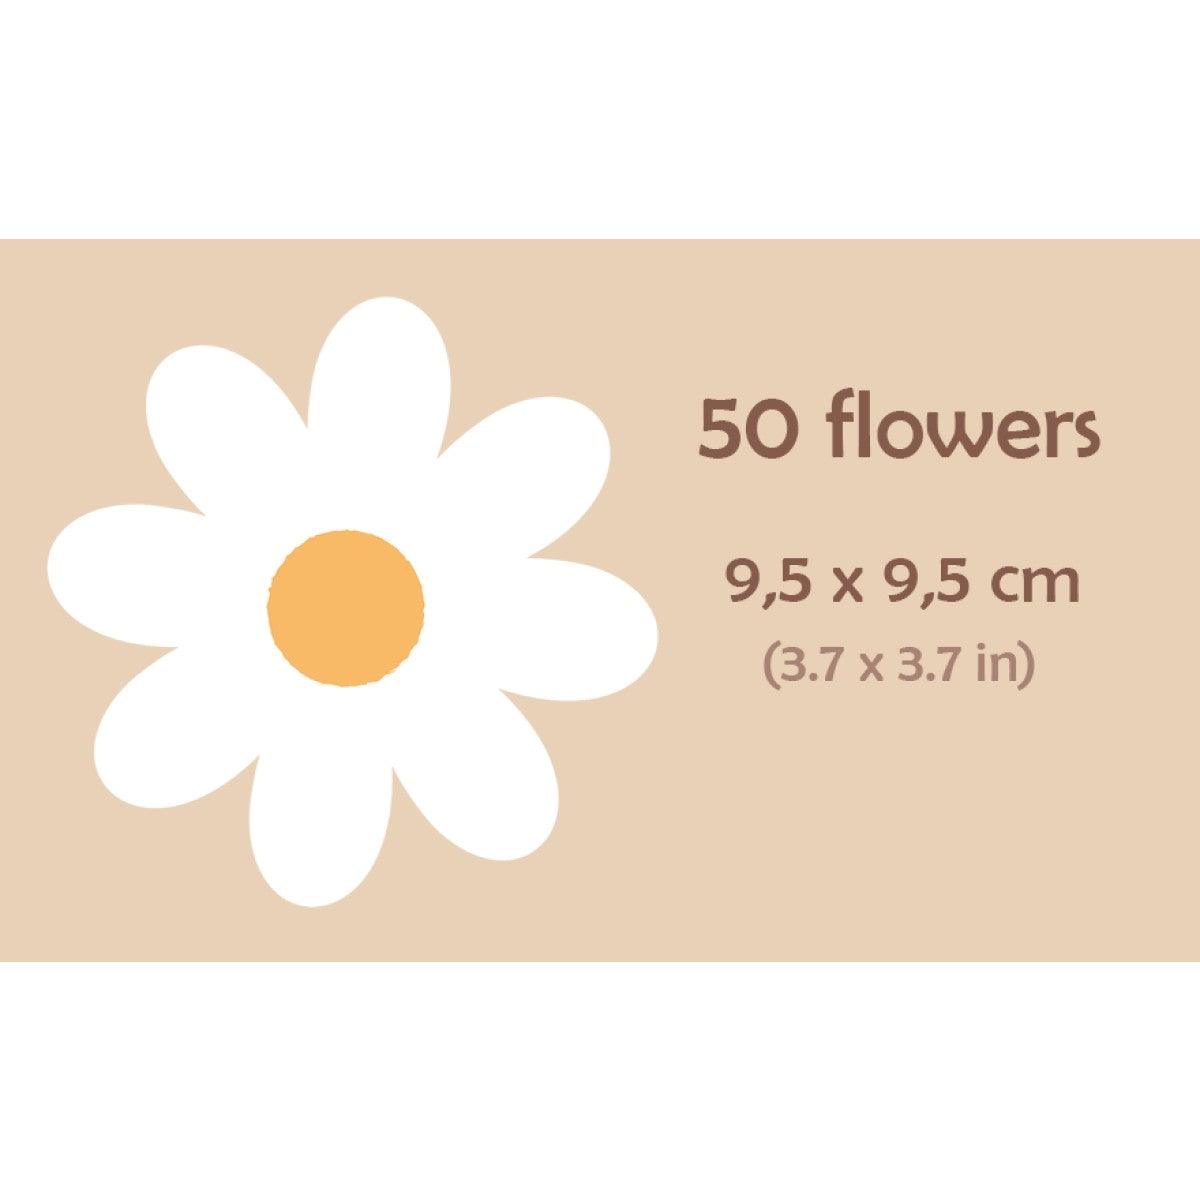 Wandtattoo Kinderzimmer - Gänseblümchen Weiß 50 Stk - Nook' d' Mel - Kinder Concept Store